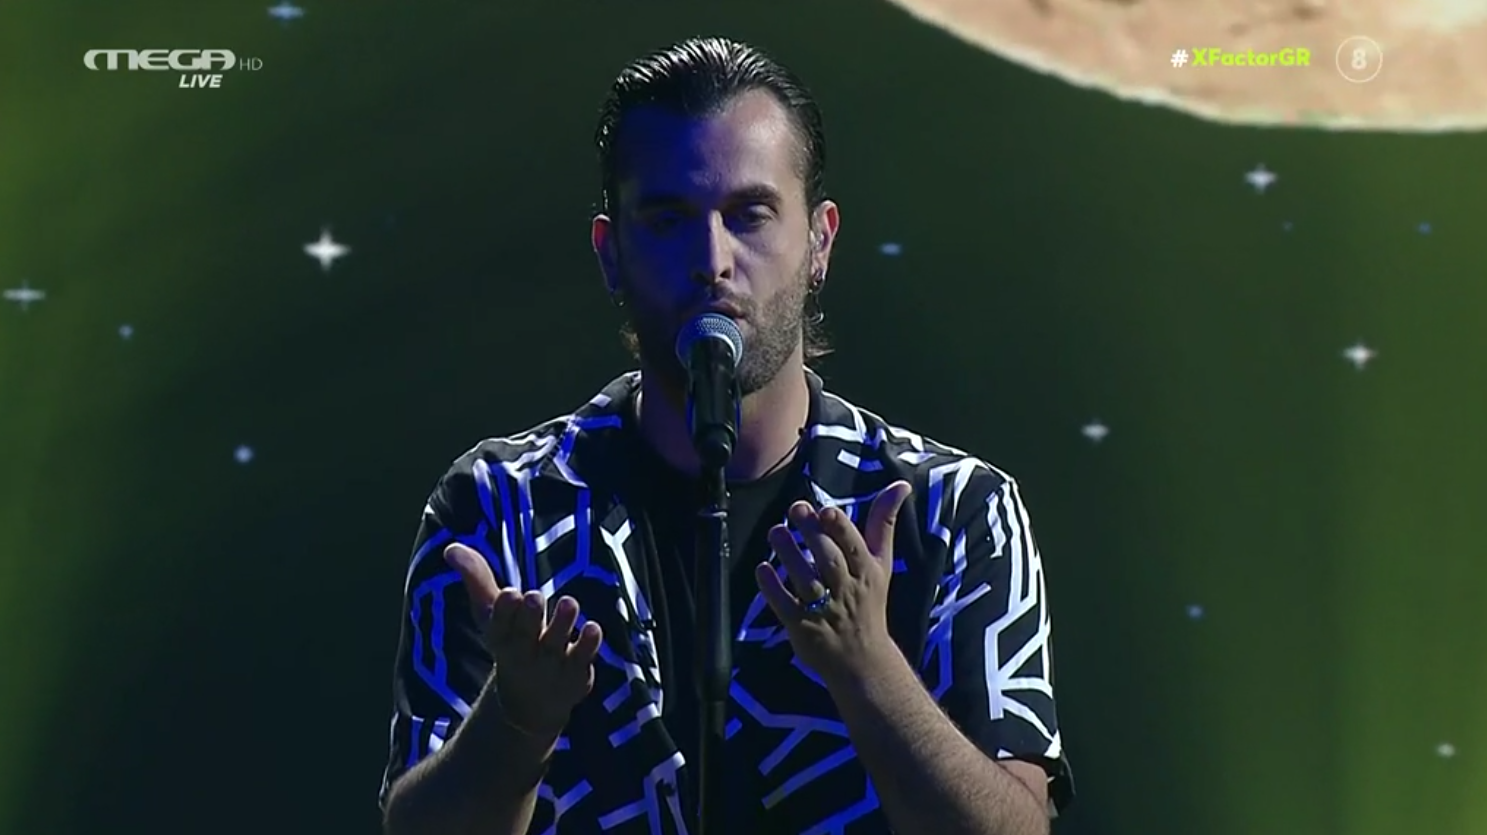 X Factor: Μάγεψε ο Χρήστος Αδαμόπουλος | MEGA TV